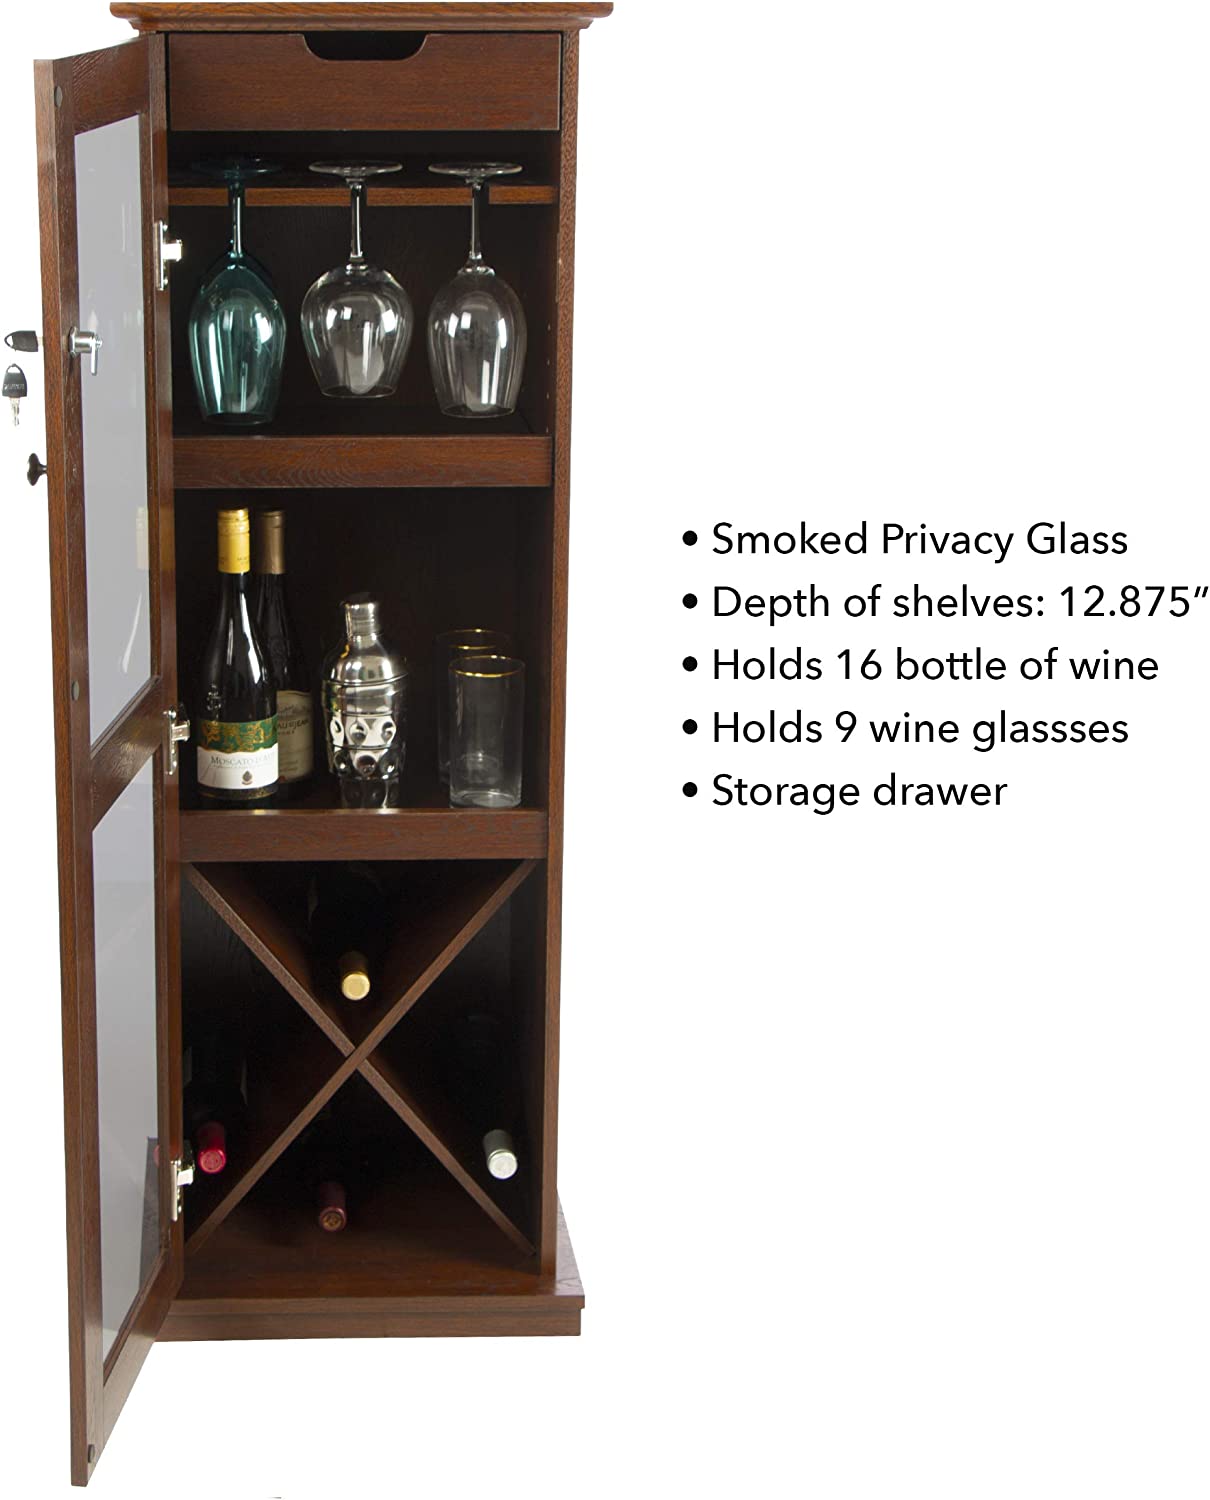 European Hidden Hinges, Storage for Wine Glasses & Bottles of Wine-$115